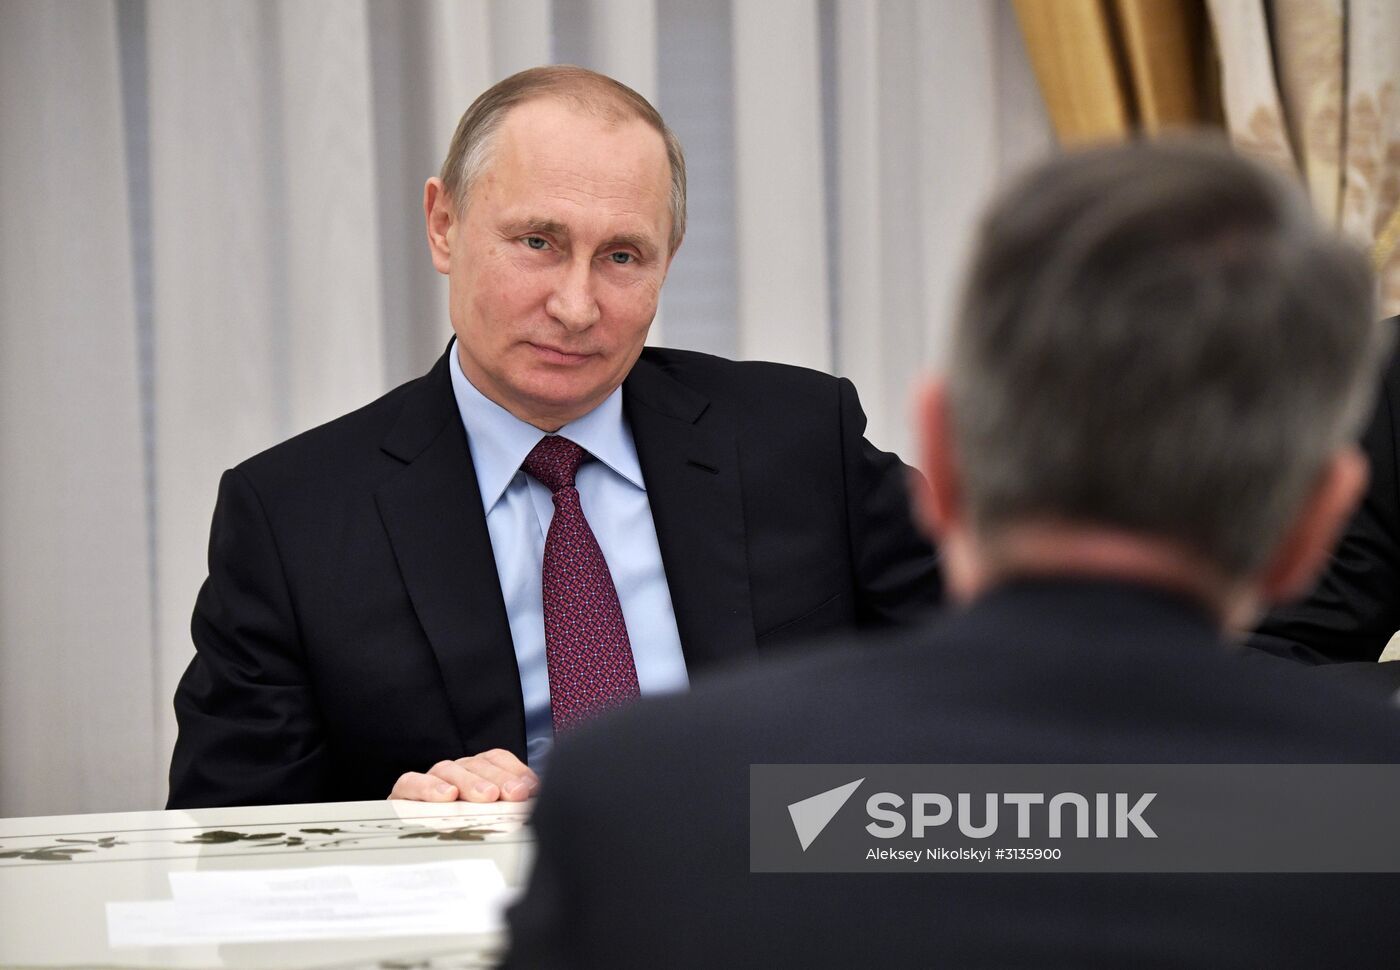 Russian President Vladimir Putin meets with Royal Dutch Shell CEO Ben van Beurden